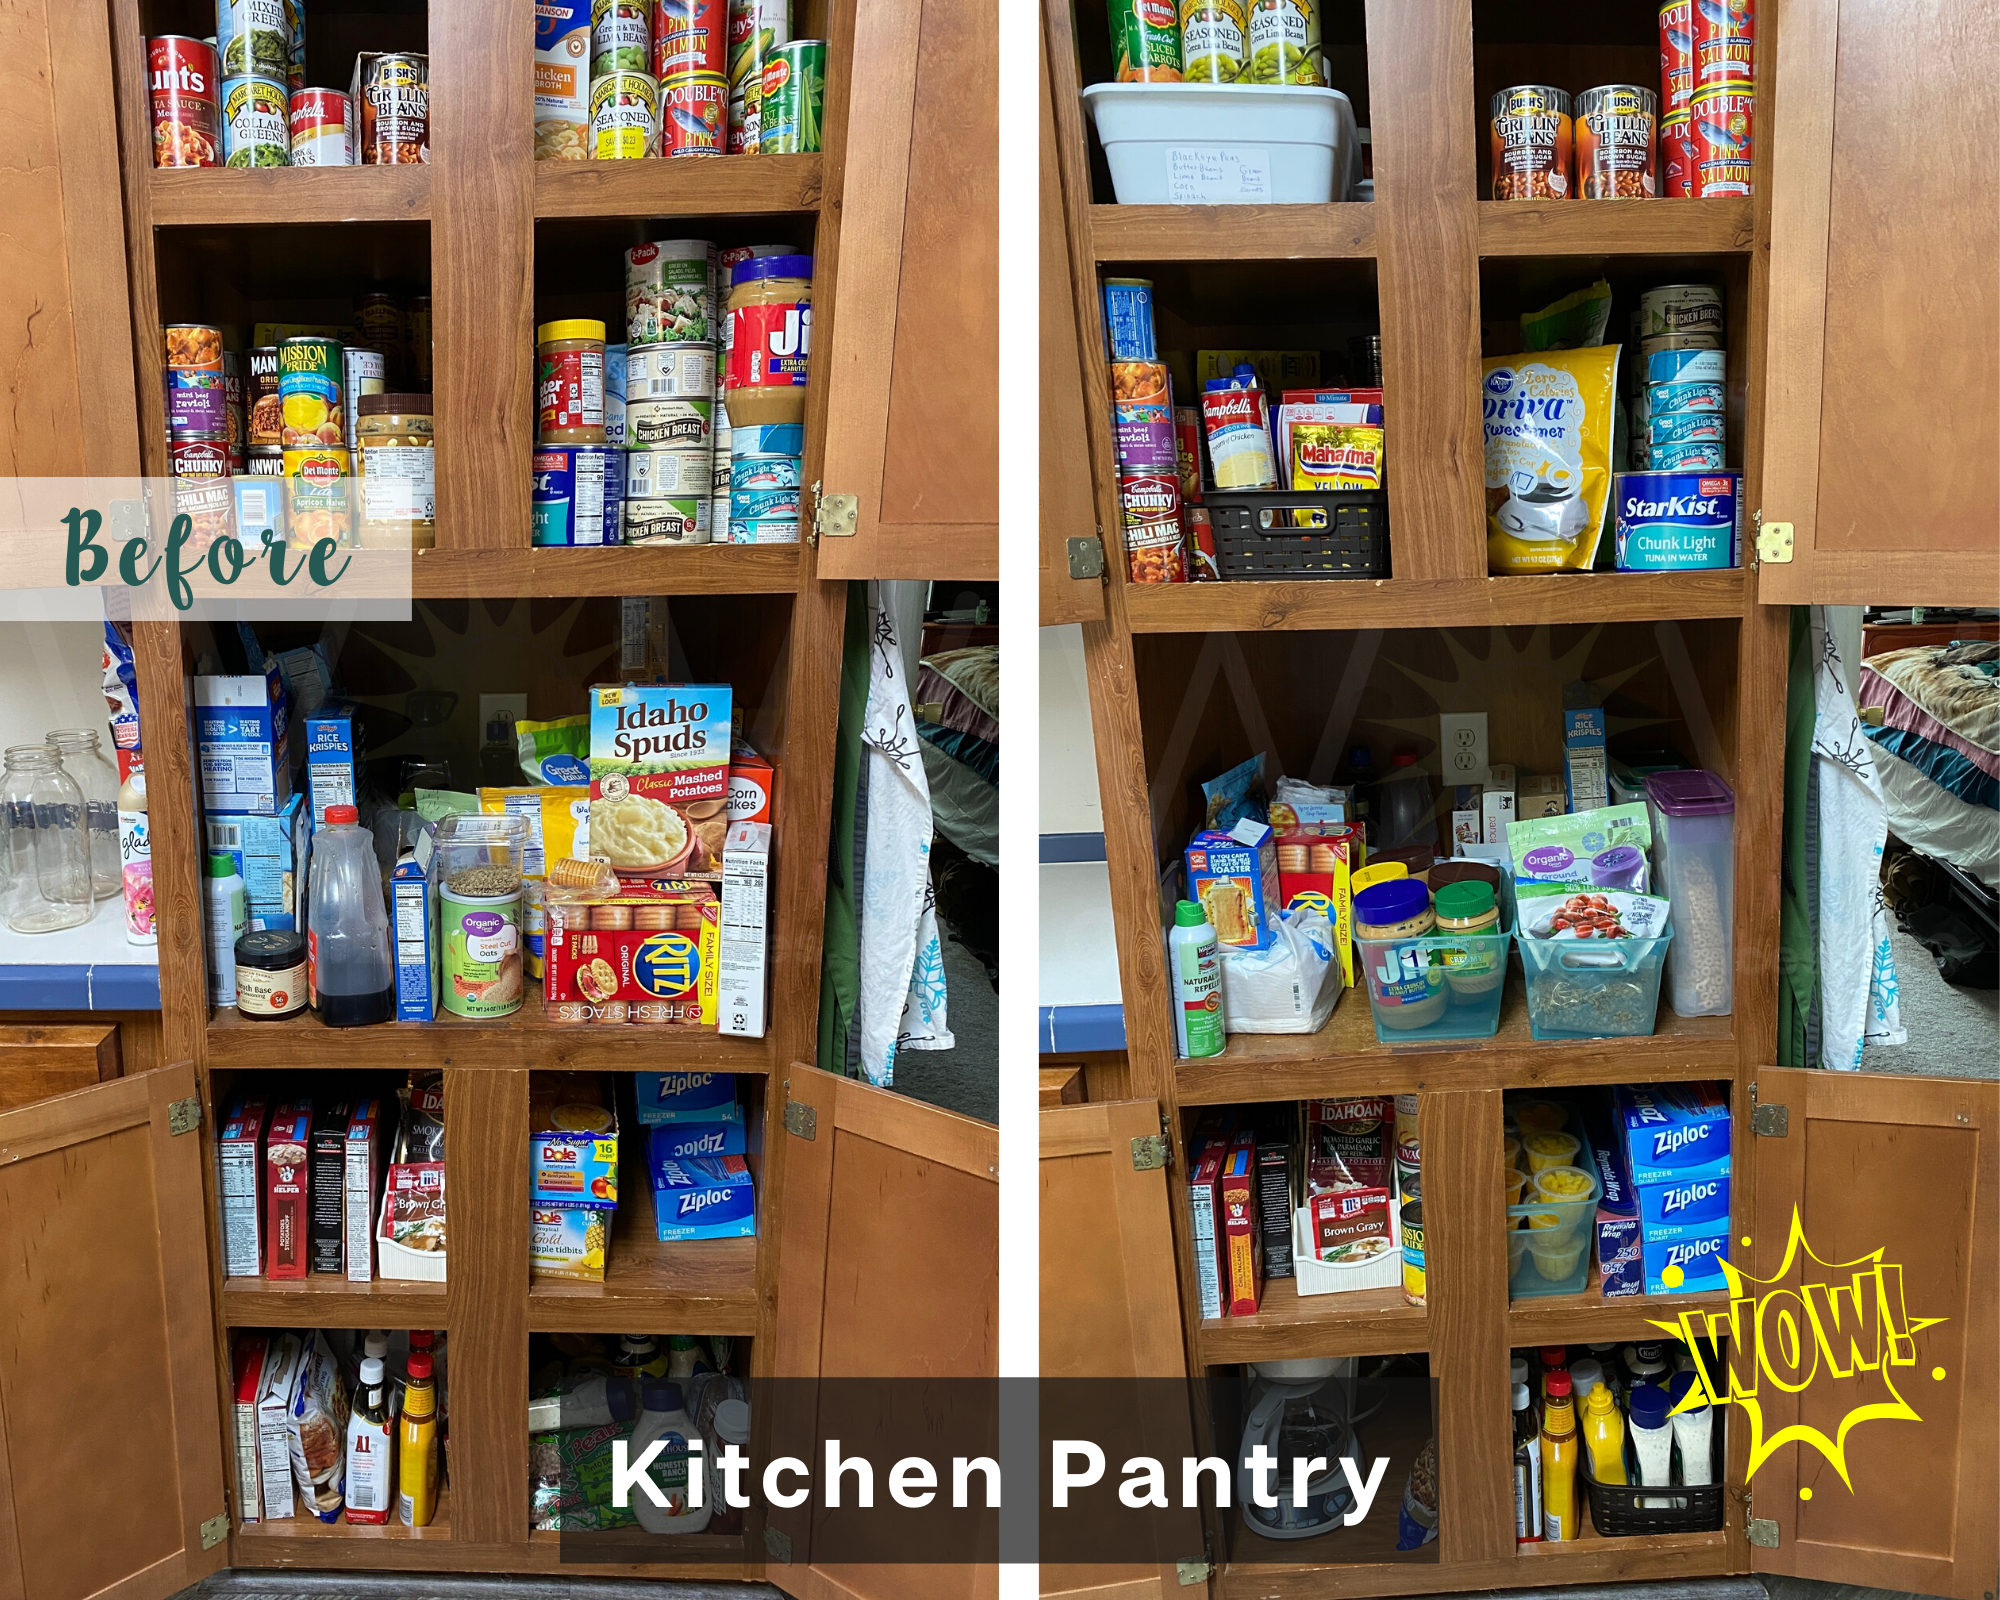 Kitchen pantry organized